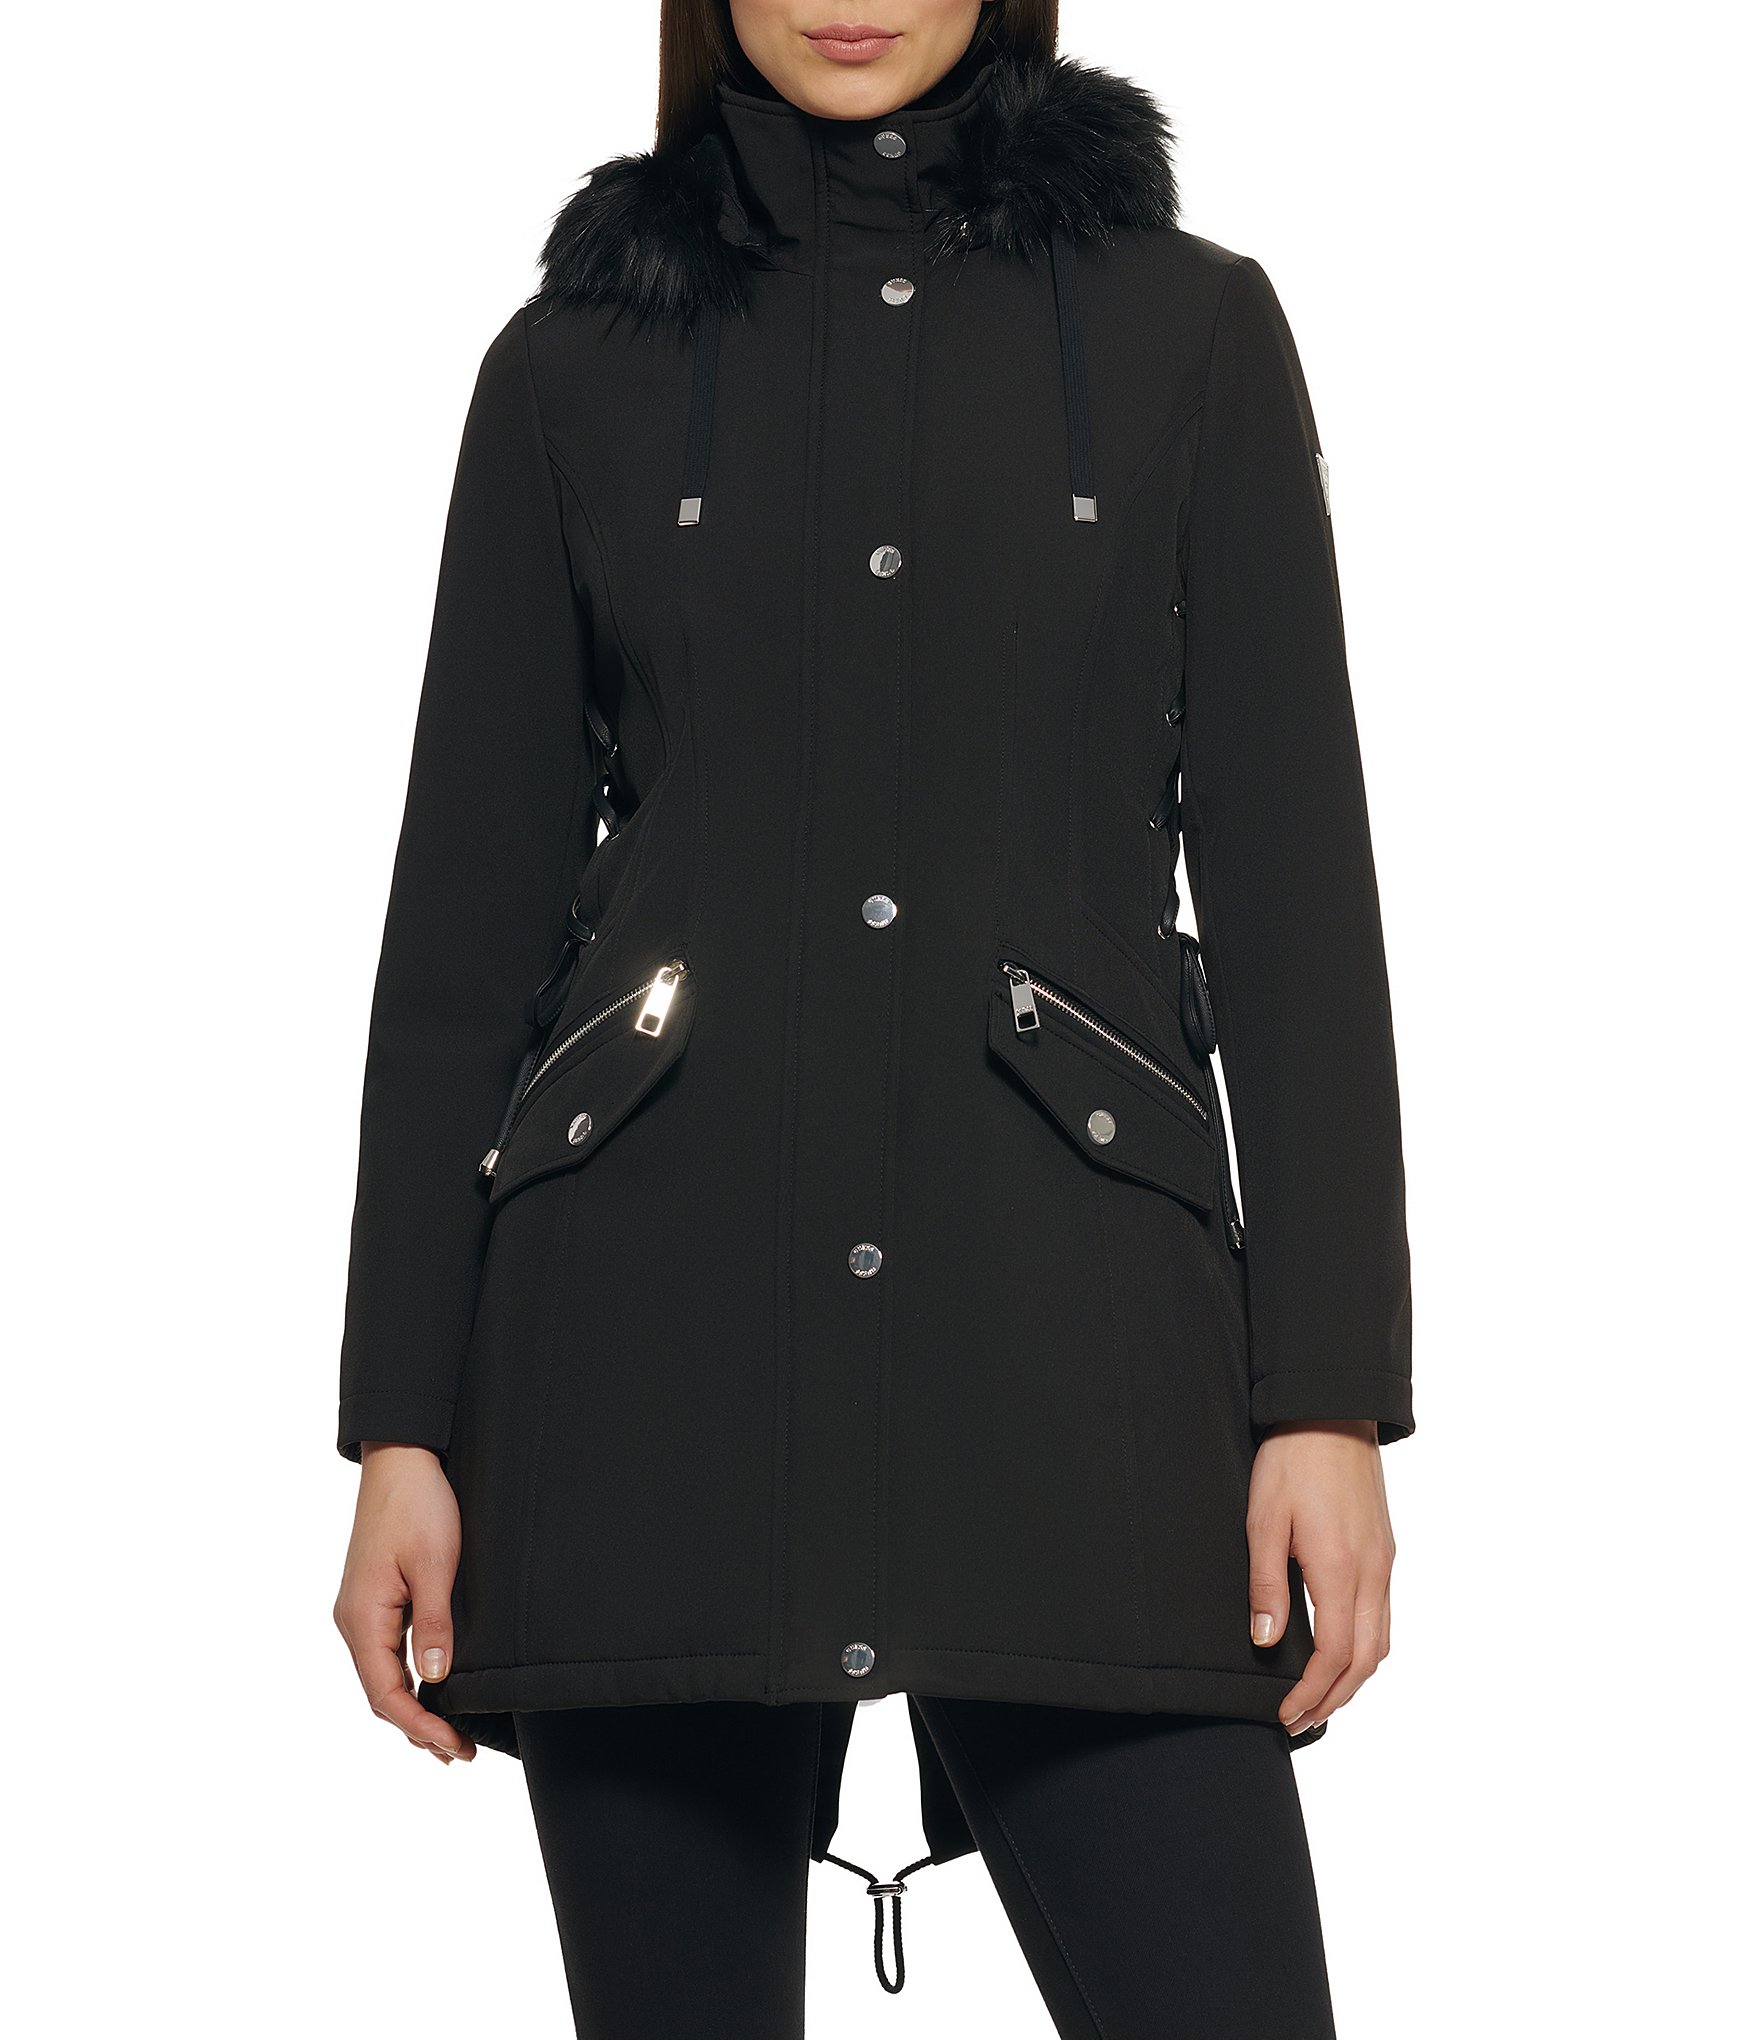 Guess Women's Coats & Jackets | Dillard's